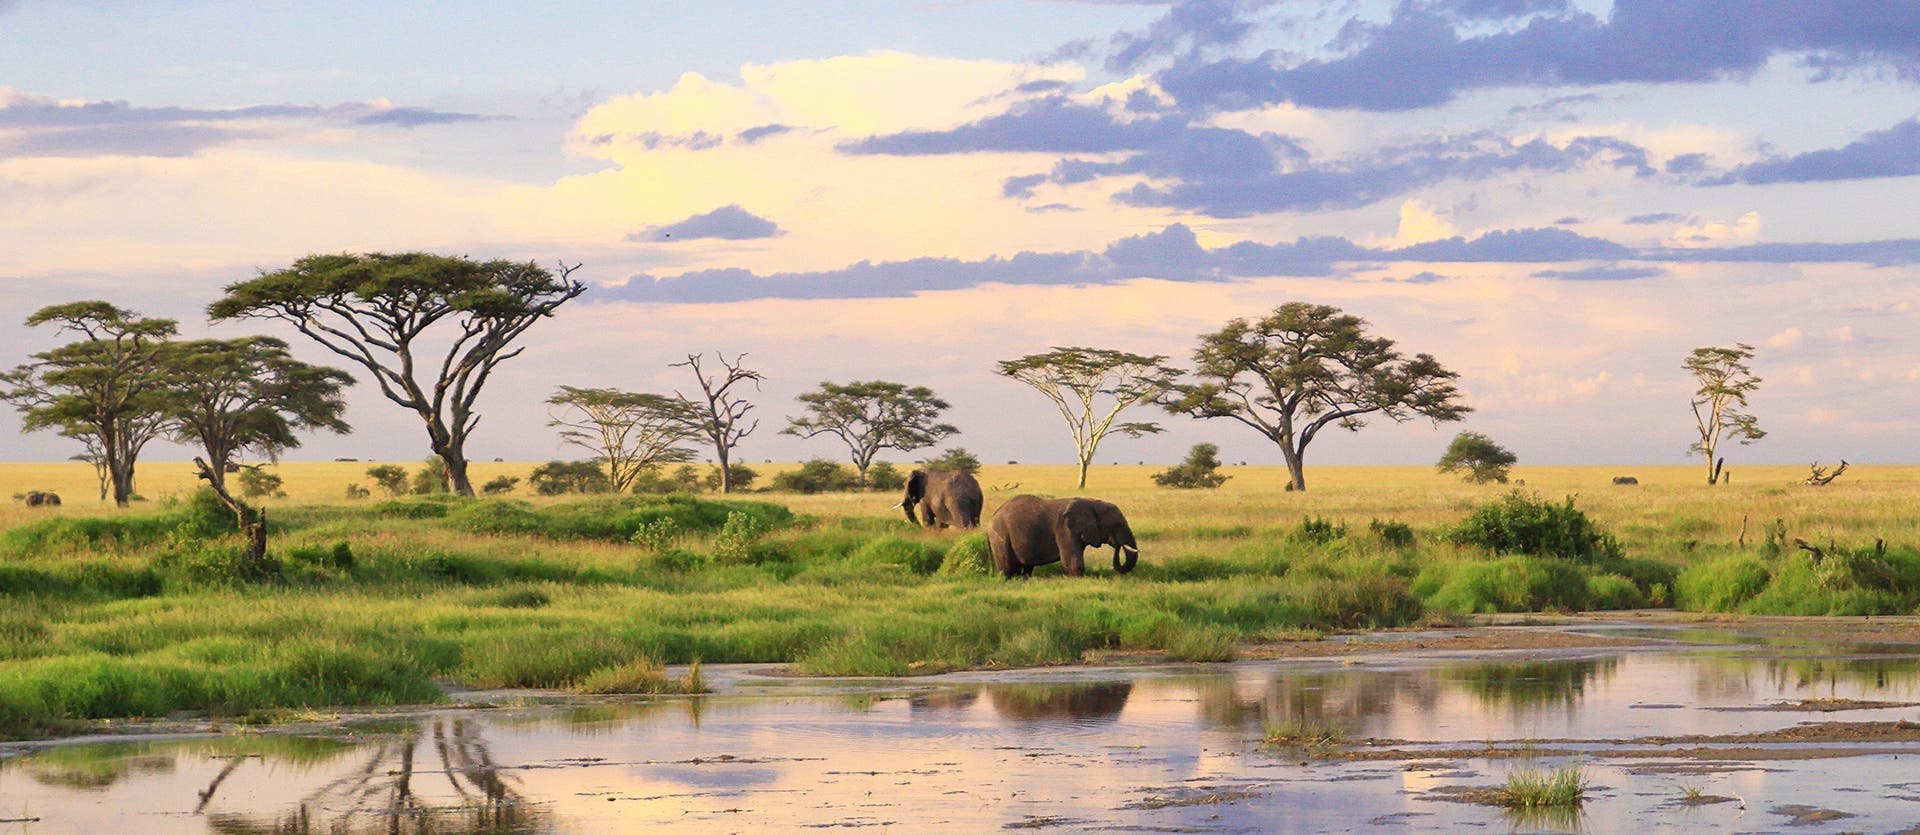 Safari en Serengueti y Tarangire